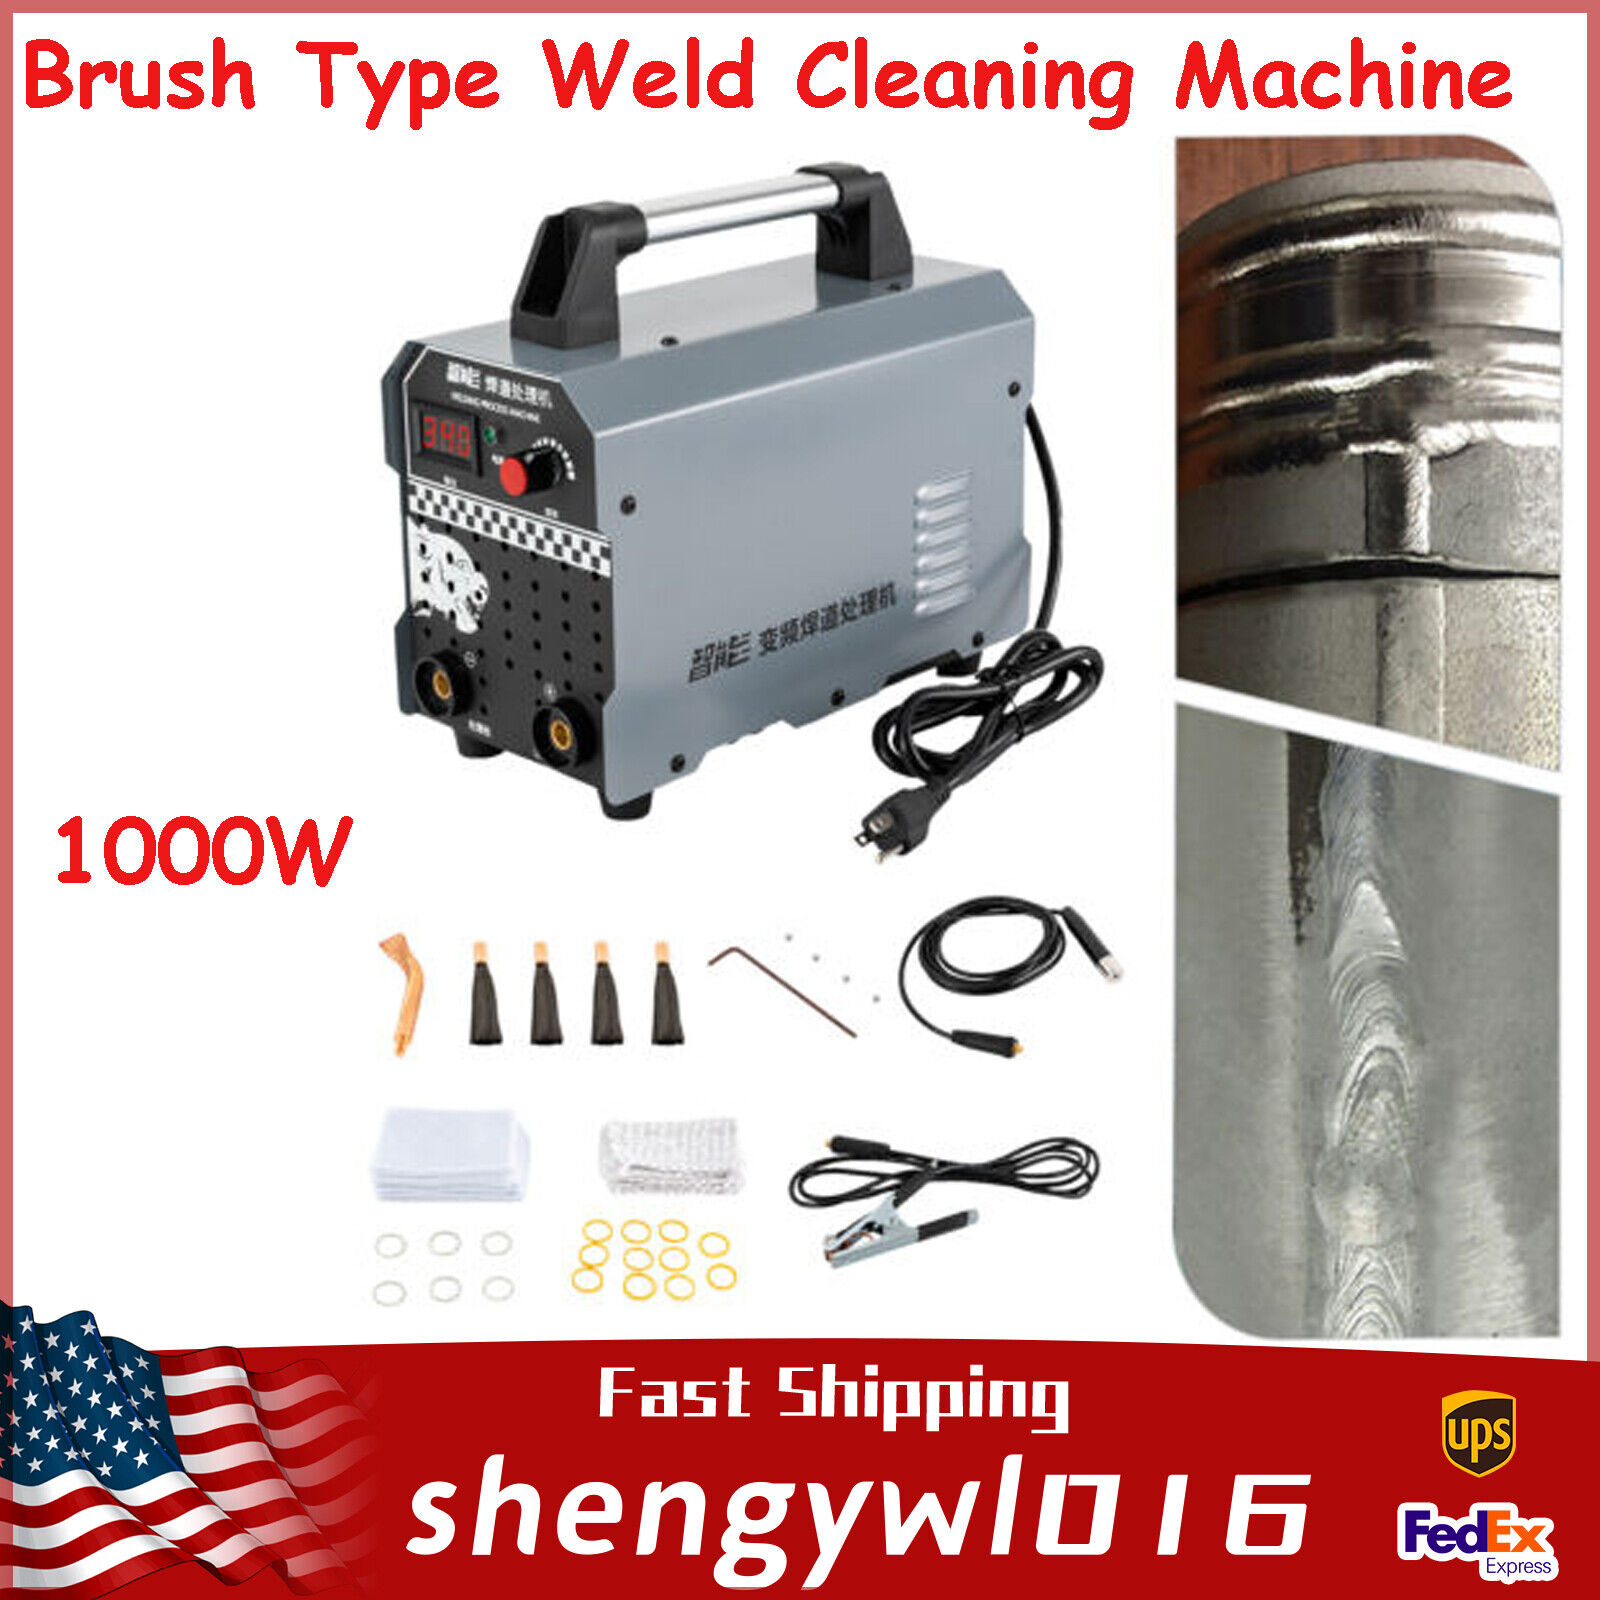 1000W Stainless Steel Welding Bead Processor,Brush Type Weld Cleaning Machine